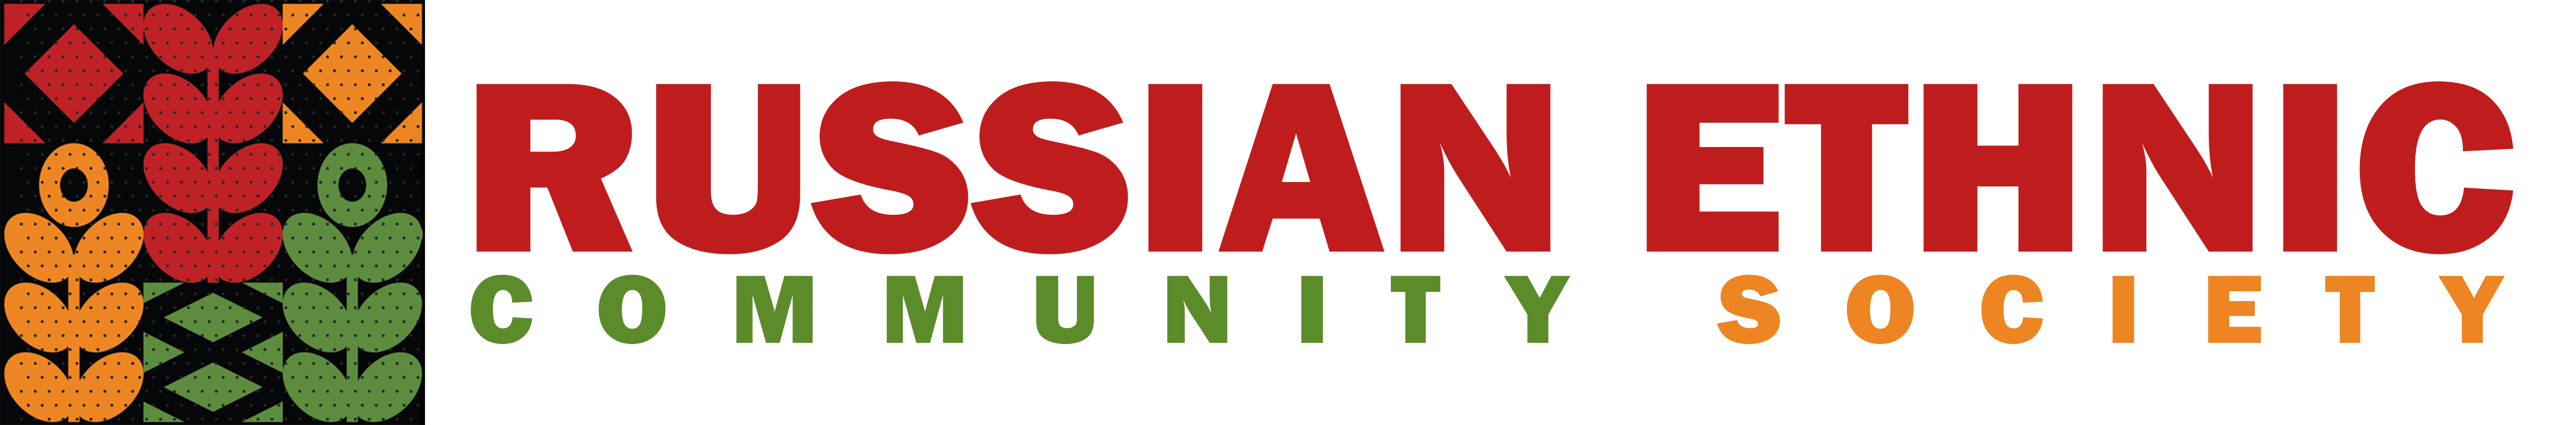 RUSSIAN ETHNIC COMMUNITY SOCIETY AUSTRALIA